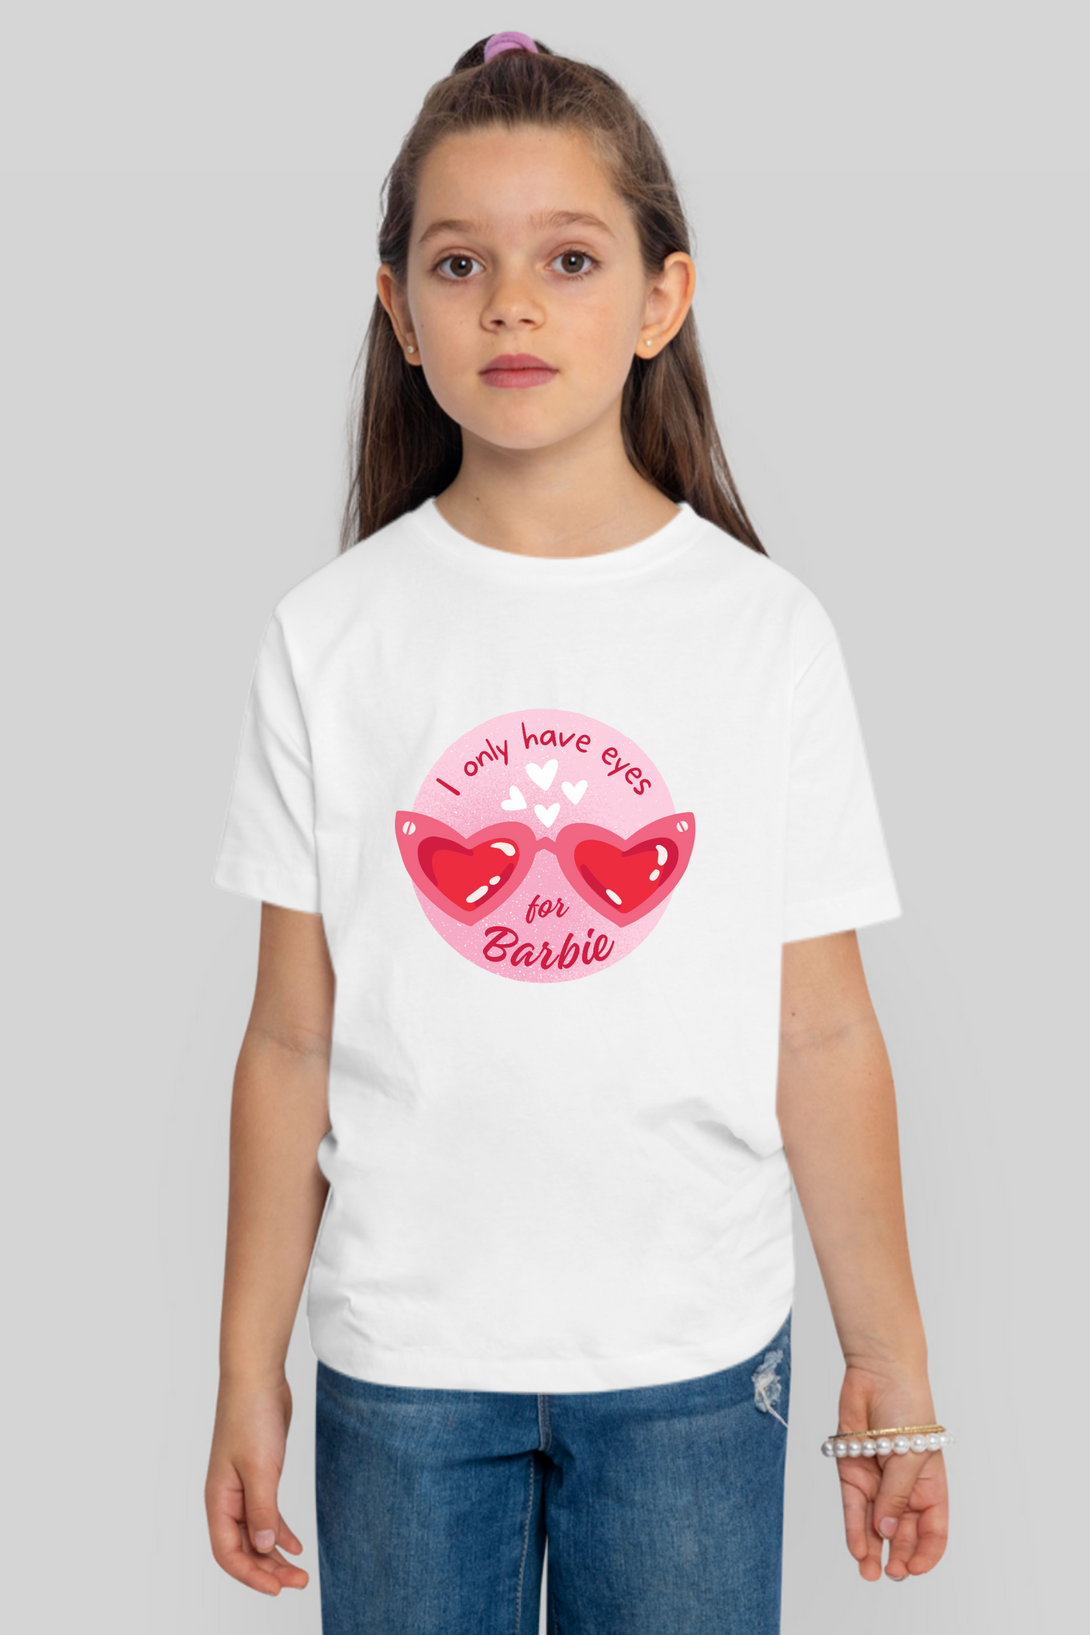 Barbie Gaze Printed T-Shirt For Girl - WowWaves - 8